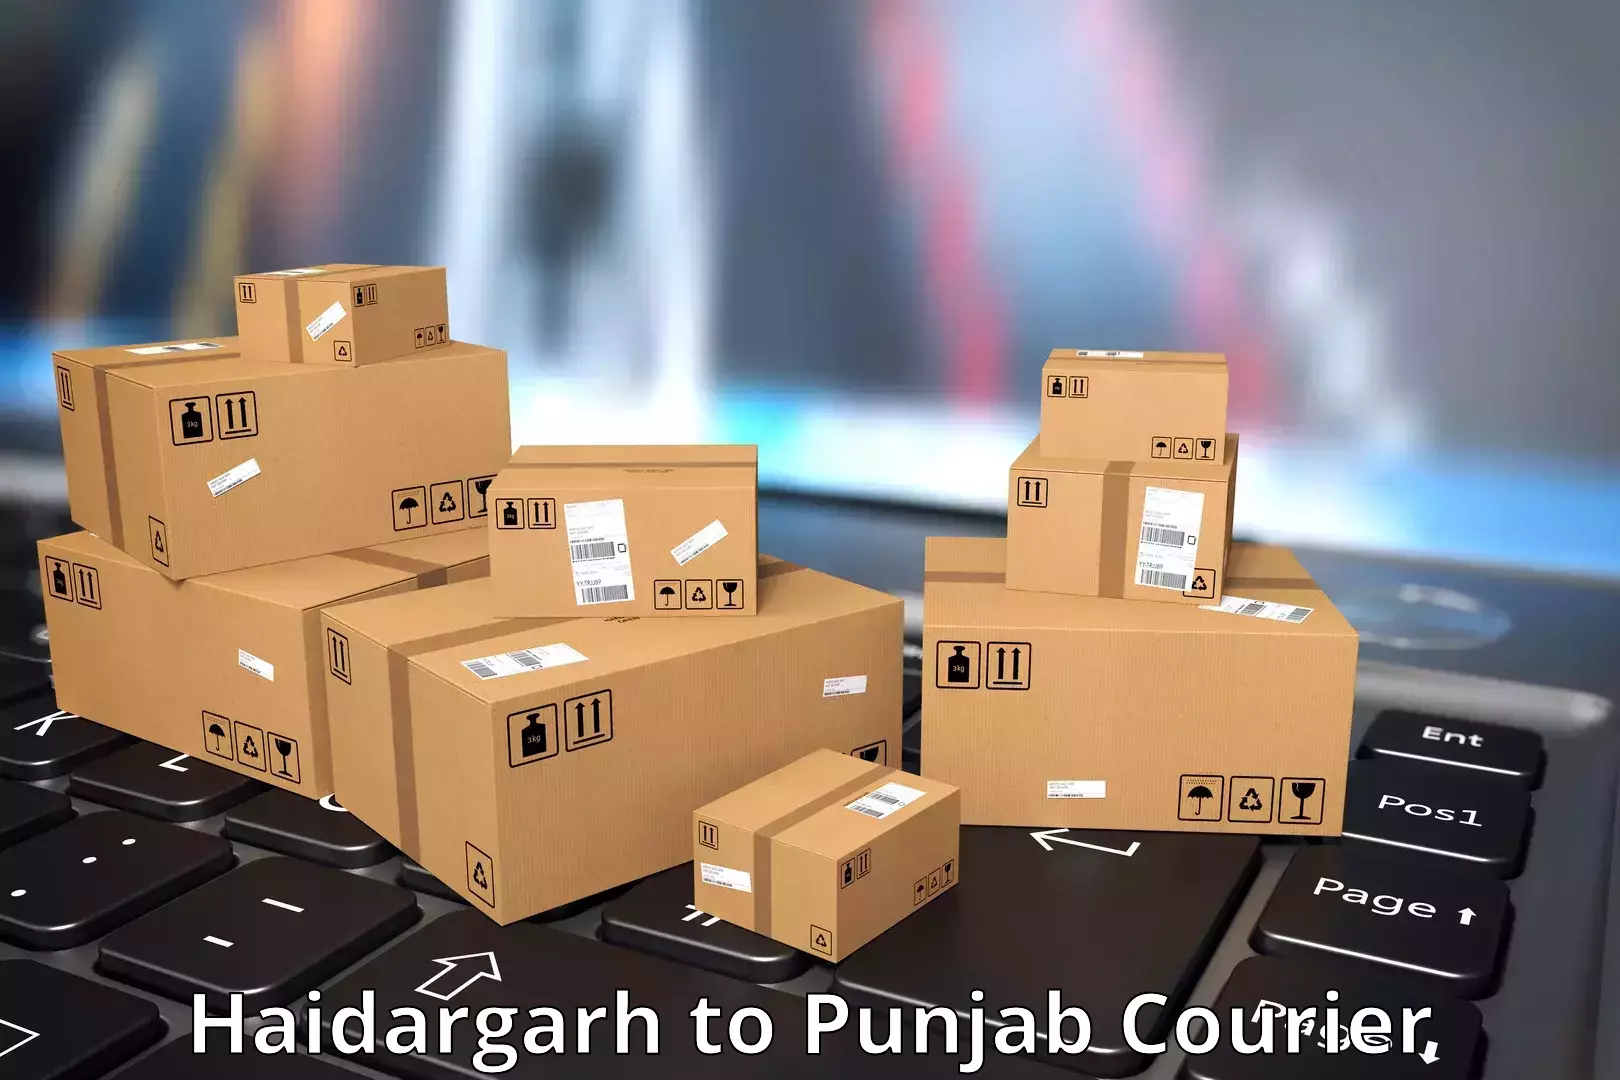 Multi-city courier Haidargarh to Zirakpur